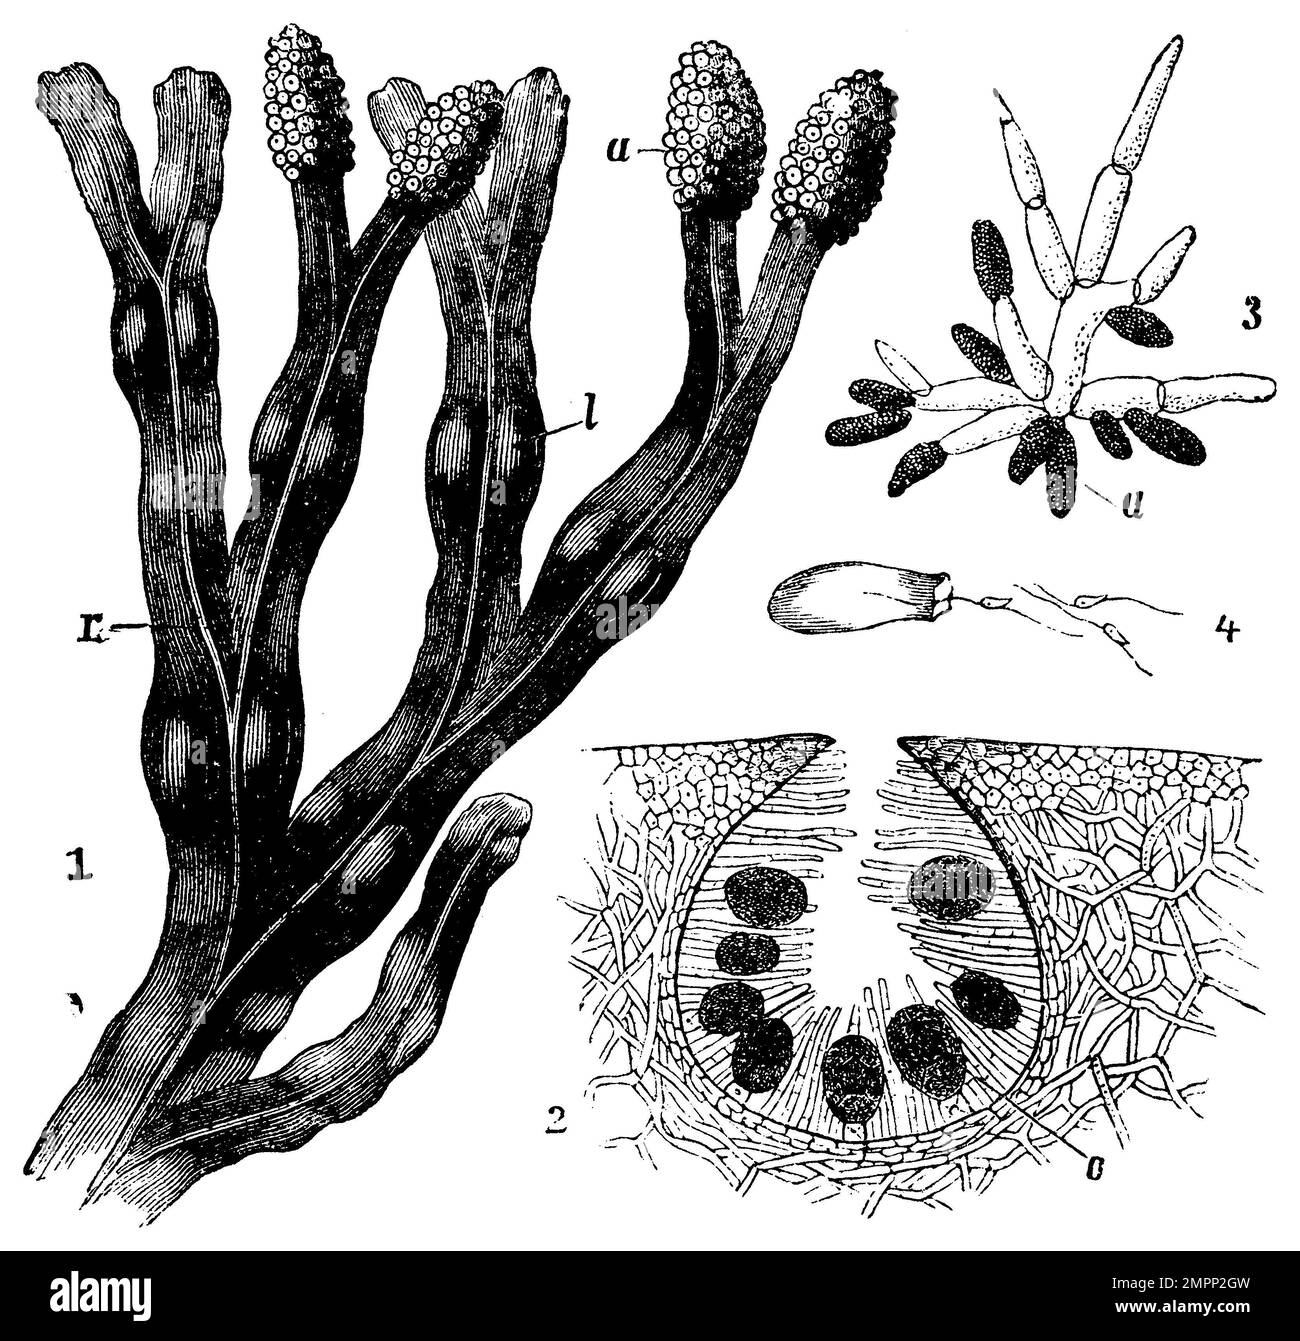 Fucus vesiculosus, 1. piece of alga, l air bubbles, r rib, a cavities, 2. section through a cavity with oogonia (o), 3. antheridia (a), spermatozoids hatching from an antheridium., Fucus vesiculosus, anonym (botany book, 1910), Blasentang, 1. Stück der Alge, l Luftblasen, r Rippe, a Hohlräume, 2. Durchschnitt durch einen Hohlraum mit Oogonien (o), 3. Antheridien (a), Spermatozoiden aus einem Antheridium ausschlüpfend, Fucus vésiculeux, 1. morceau d'algue, l bulles d'air, r côte, a cavités, 2. section à travers une cavité avec oogonies (o), 3. anthéridies (a), spermatozoïdes émergeant d'un anth Stock Photo